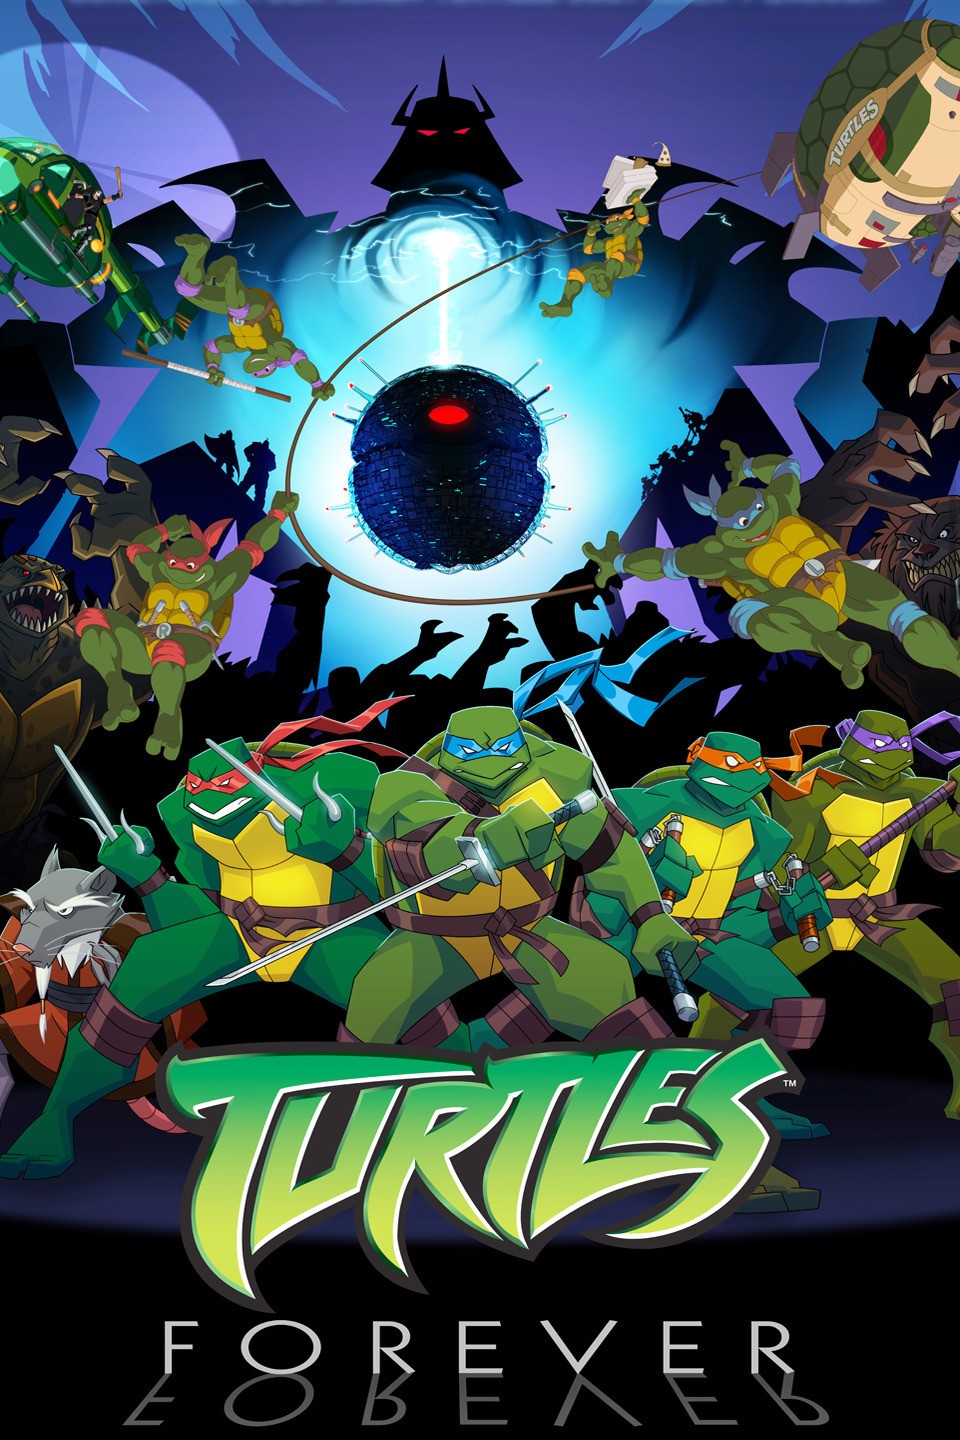 Teenage Mutant Ninja Turtles): The Ultimate Collection: The Complete 2003  TV Series & TV Movie (DVD), Viacom, Kids & Family